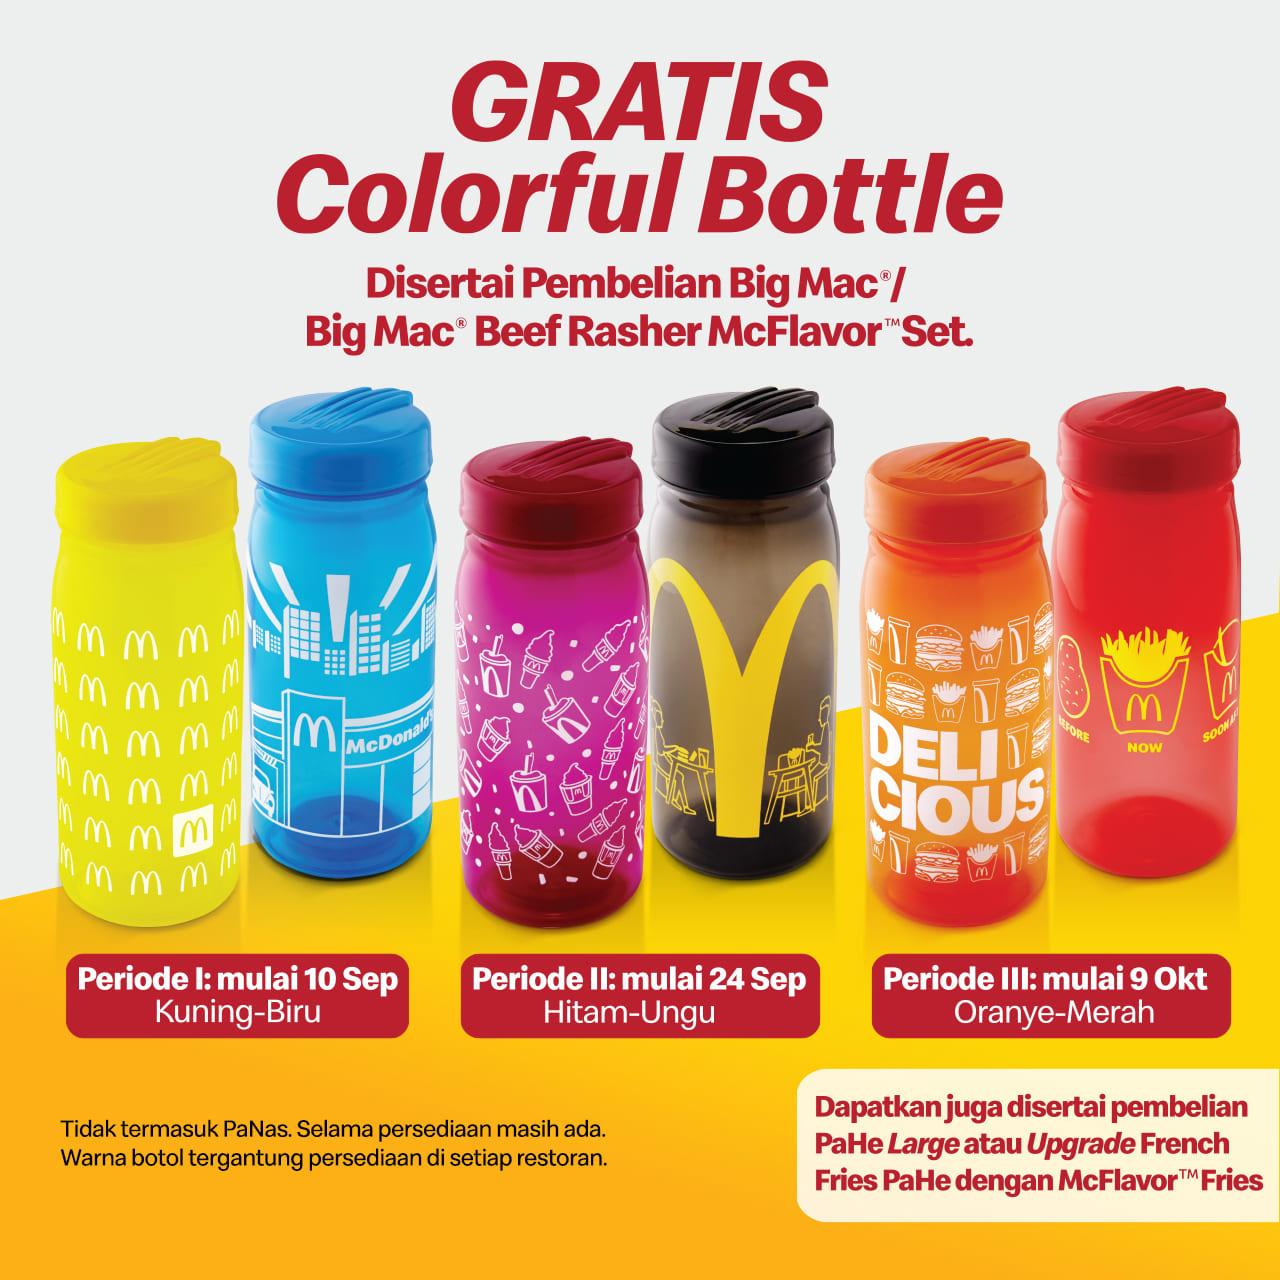 Promo McDonalds GRATIS Colorful Bottle*